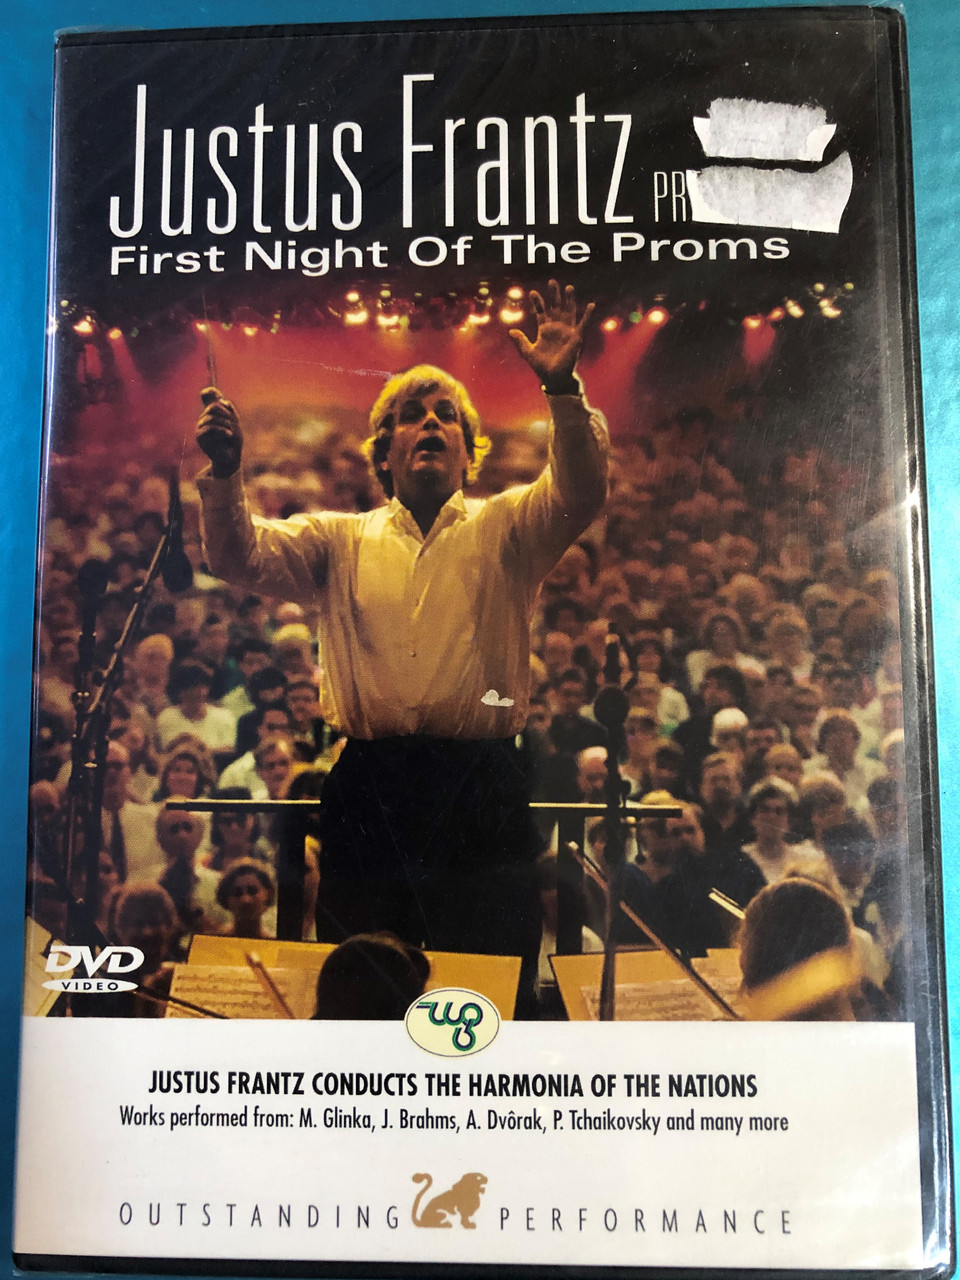 Justus Frantz DVD 2006 First Night Of the Proms / Directed by Rolf Sturm /  Brahms, Dvorák, Tchaikovsky, Strauss / Weton-Wesgram - Perform 033 / J.  Frantz conducts the Harmonia of the Nations - bibleinmylanguage